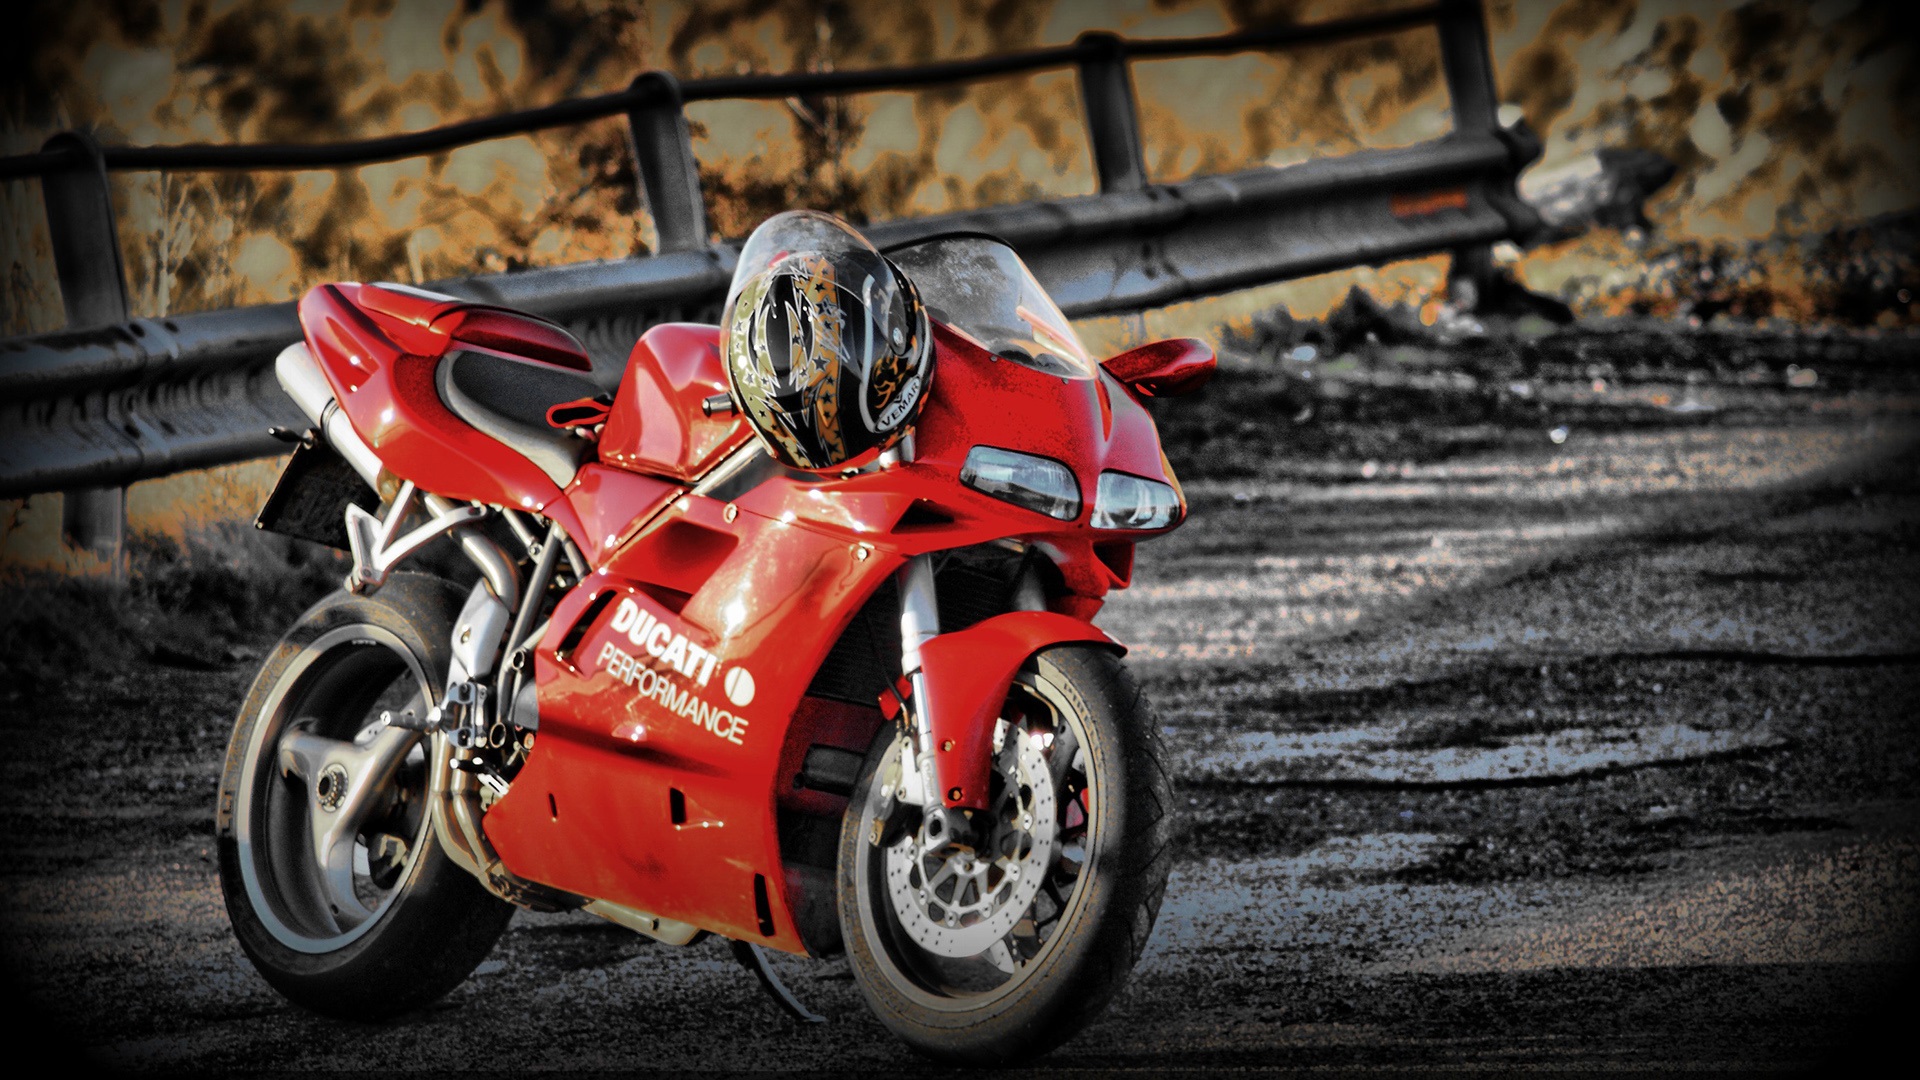 Wallpaper Ducati 748 Red Motorcycle - Red Motorcycle Wallpaper Hd - 1920x1080  Wallpaper 